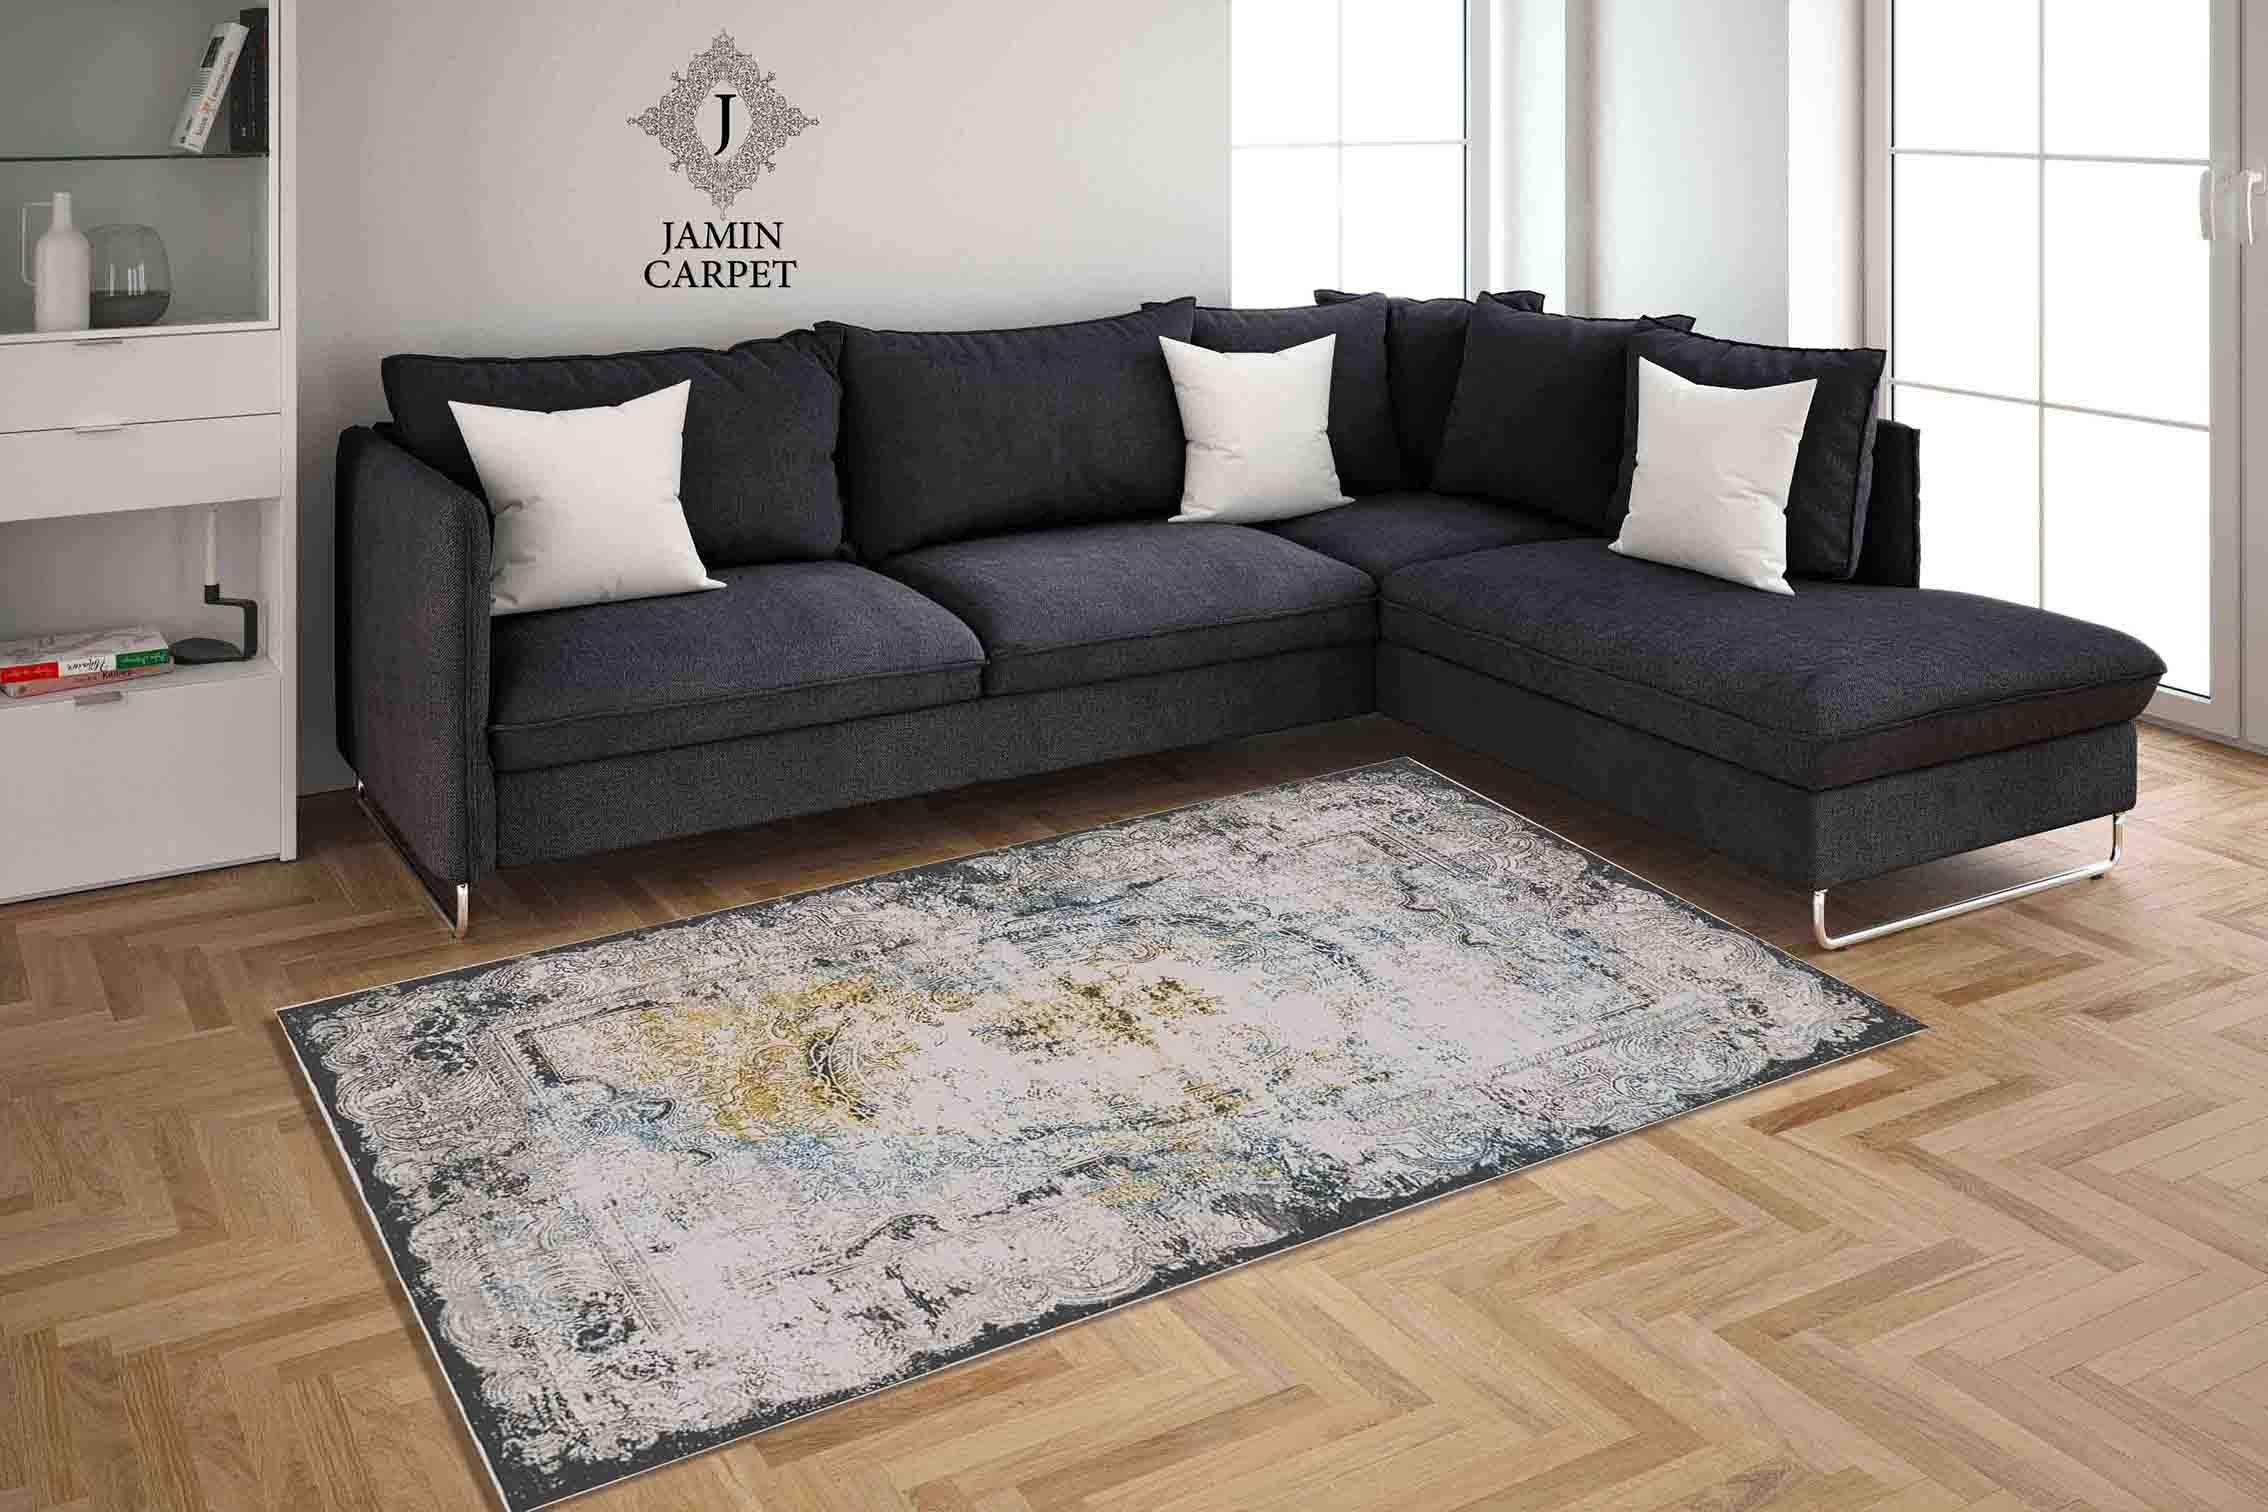 Fantasy carpet code 243 comb 400 density 1800 all acrylic